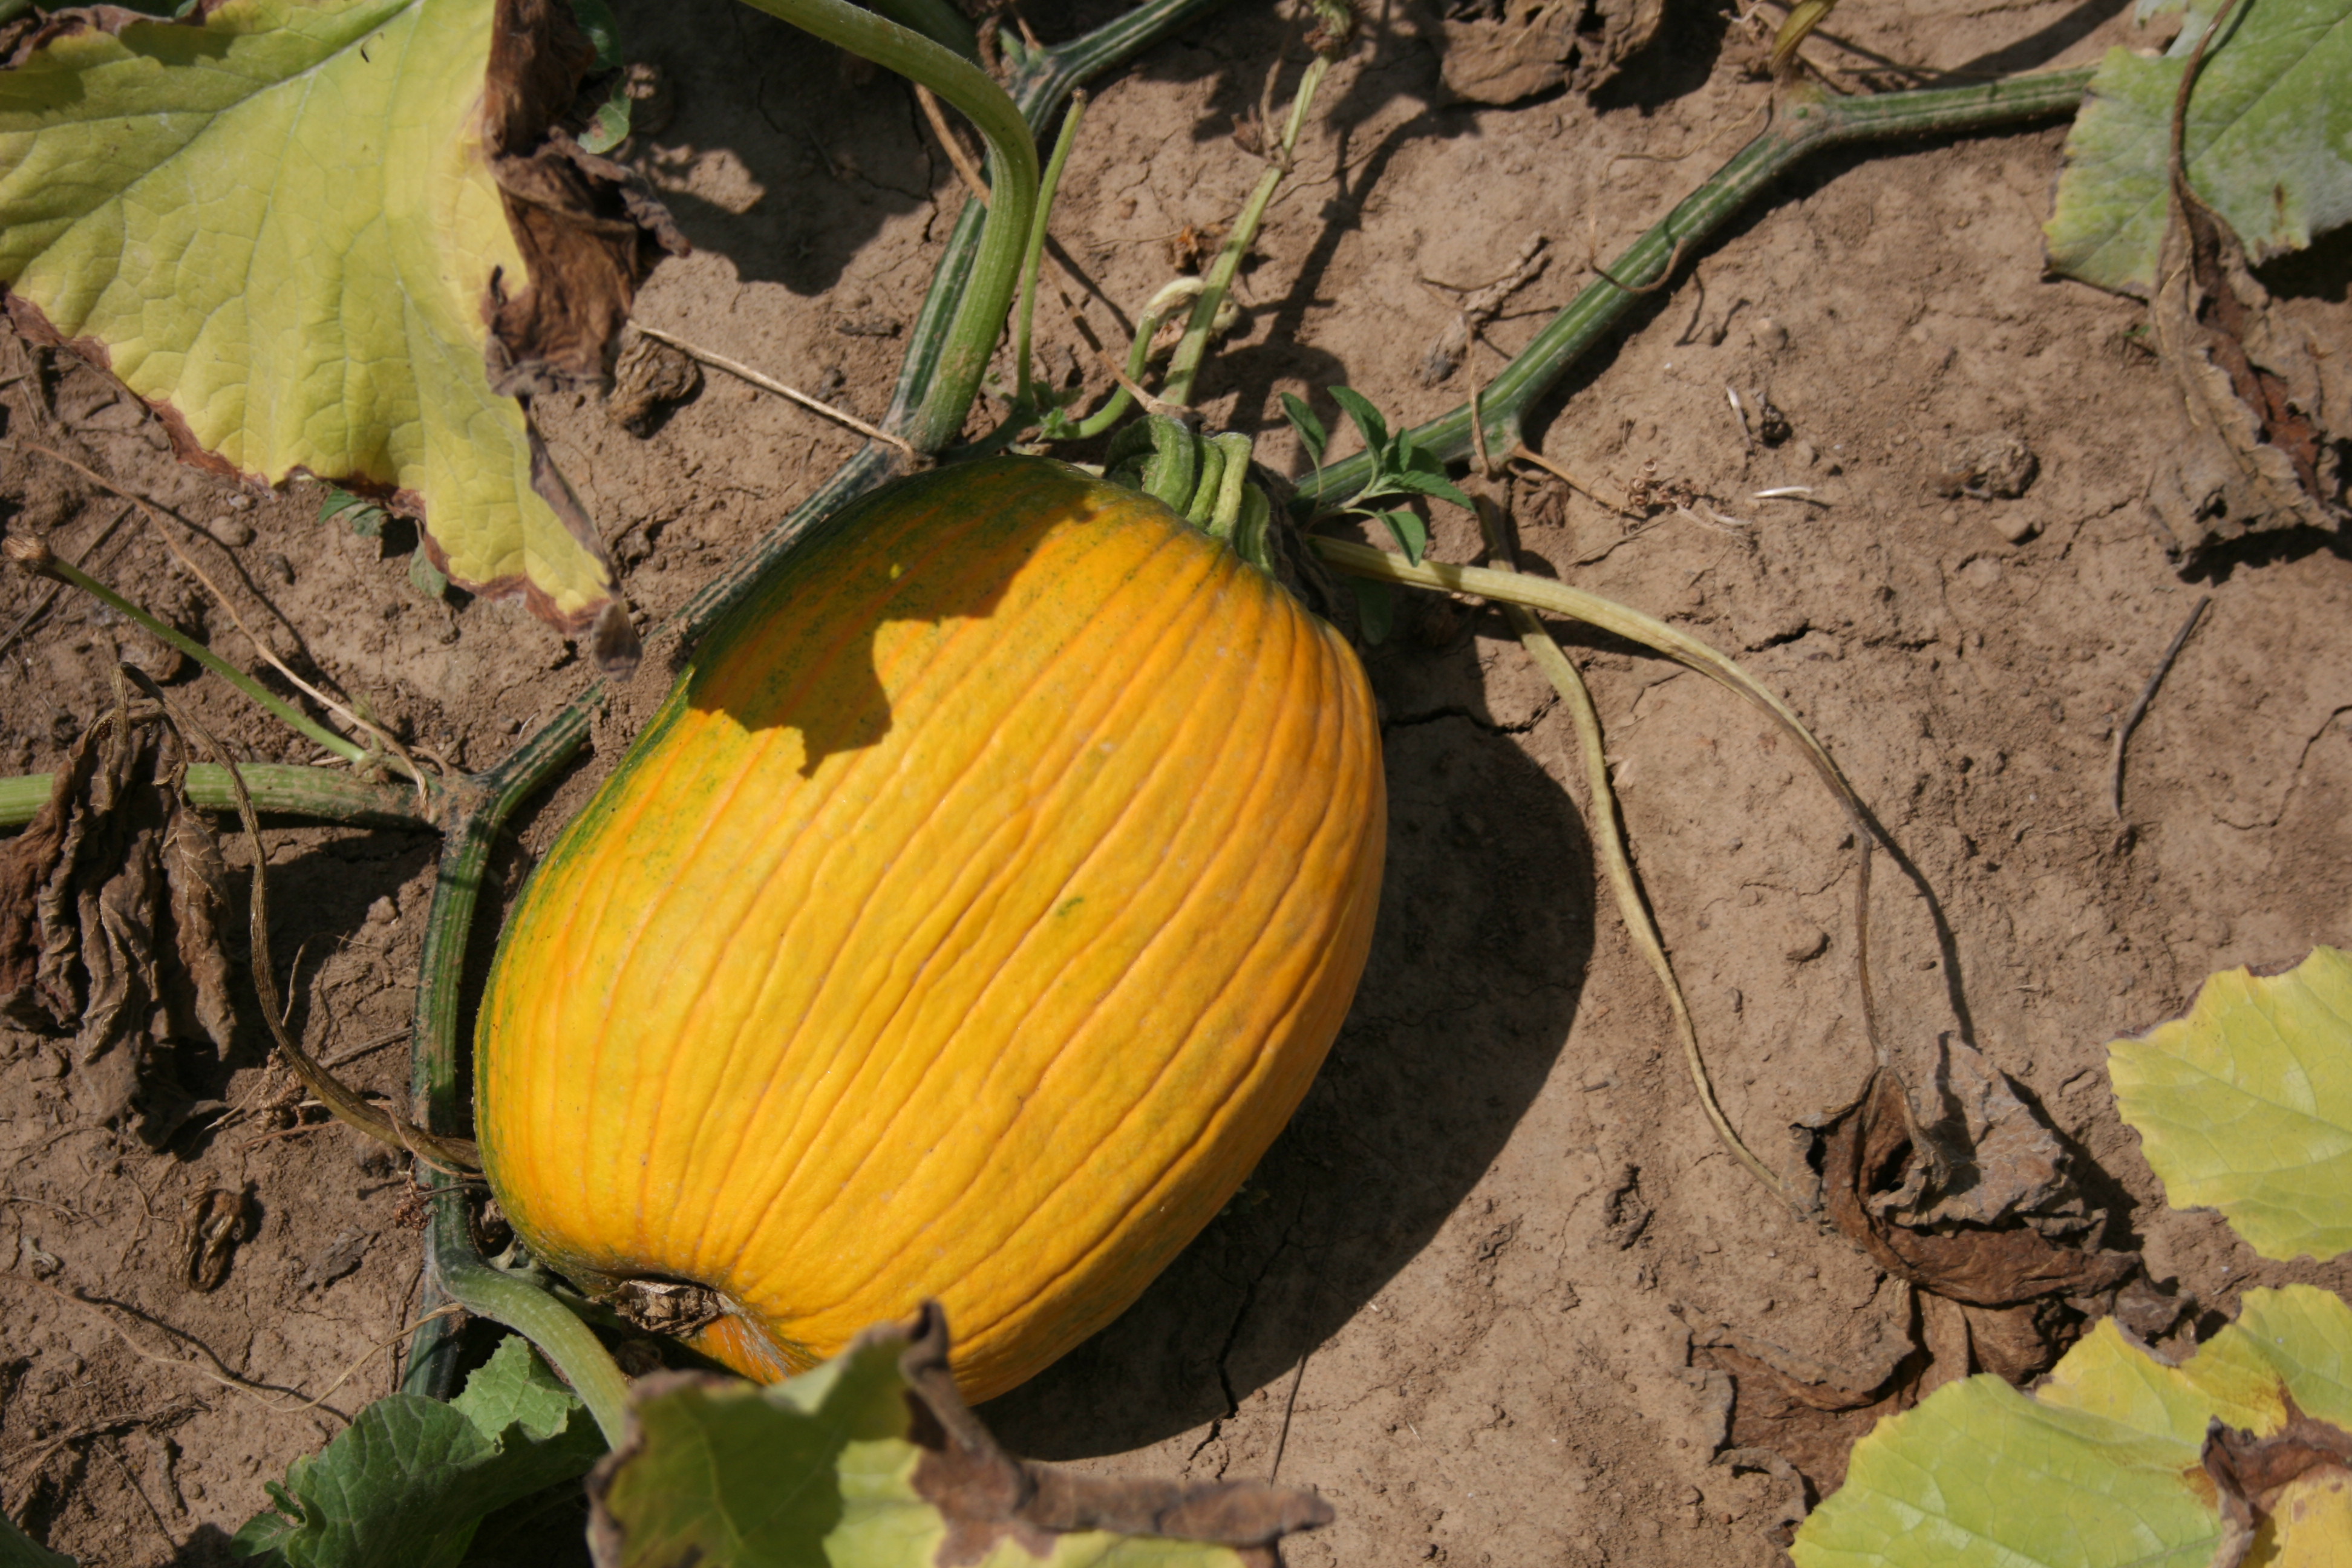 Drought/sunburn symptoms on pumpkin.